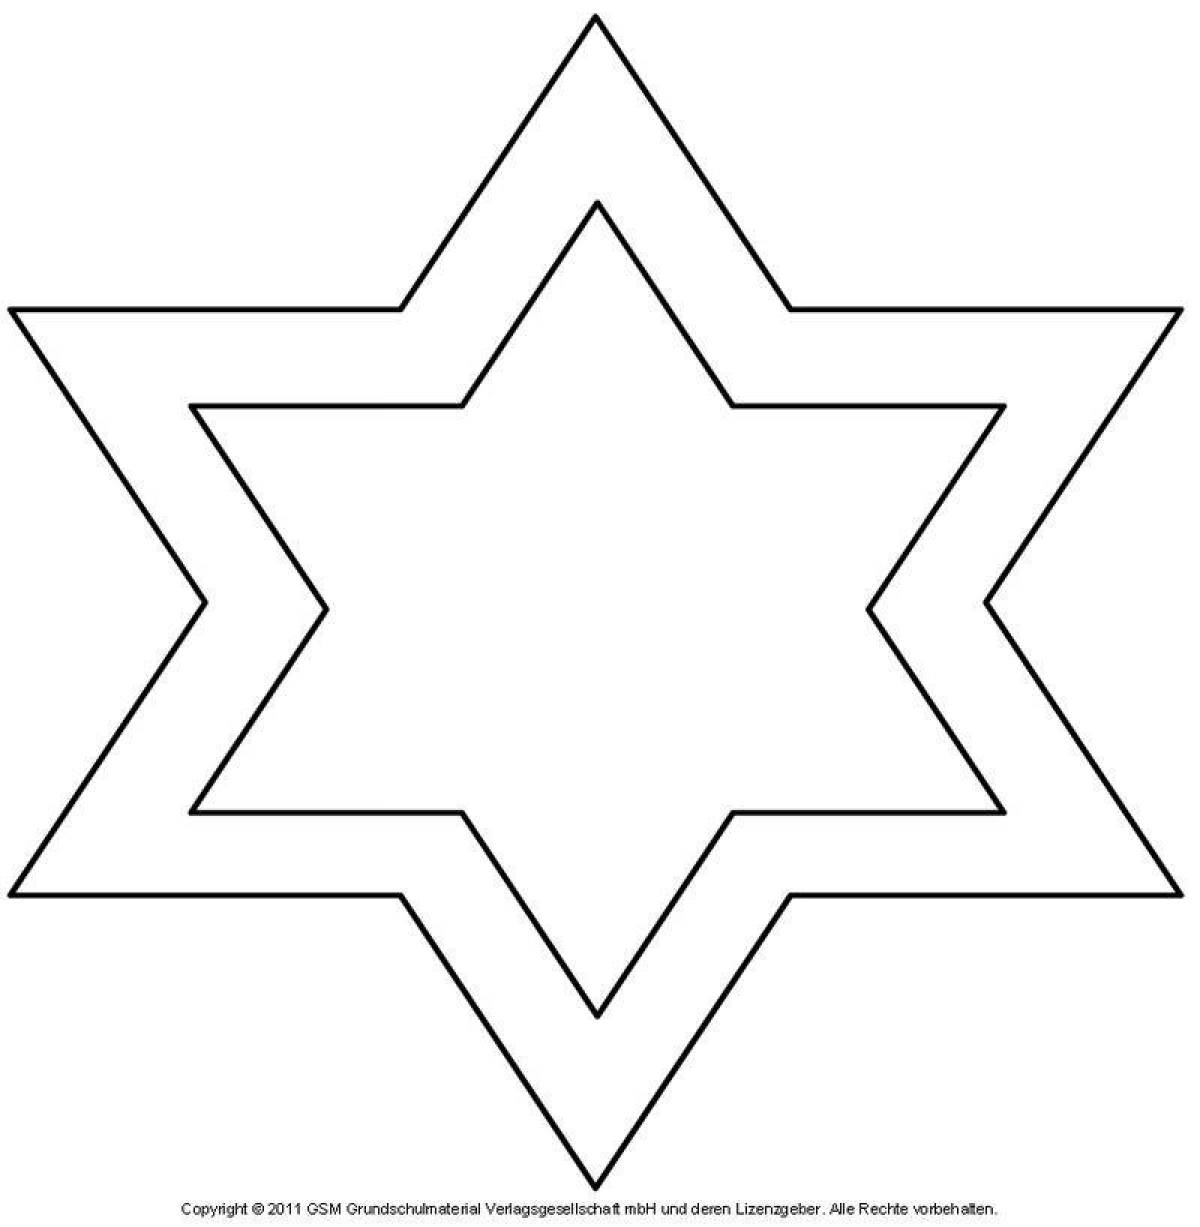 Трафарет шестигранной звезды